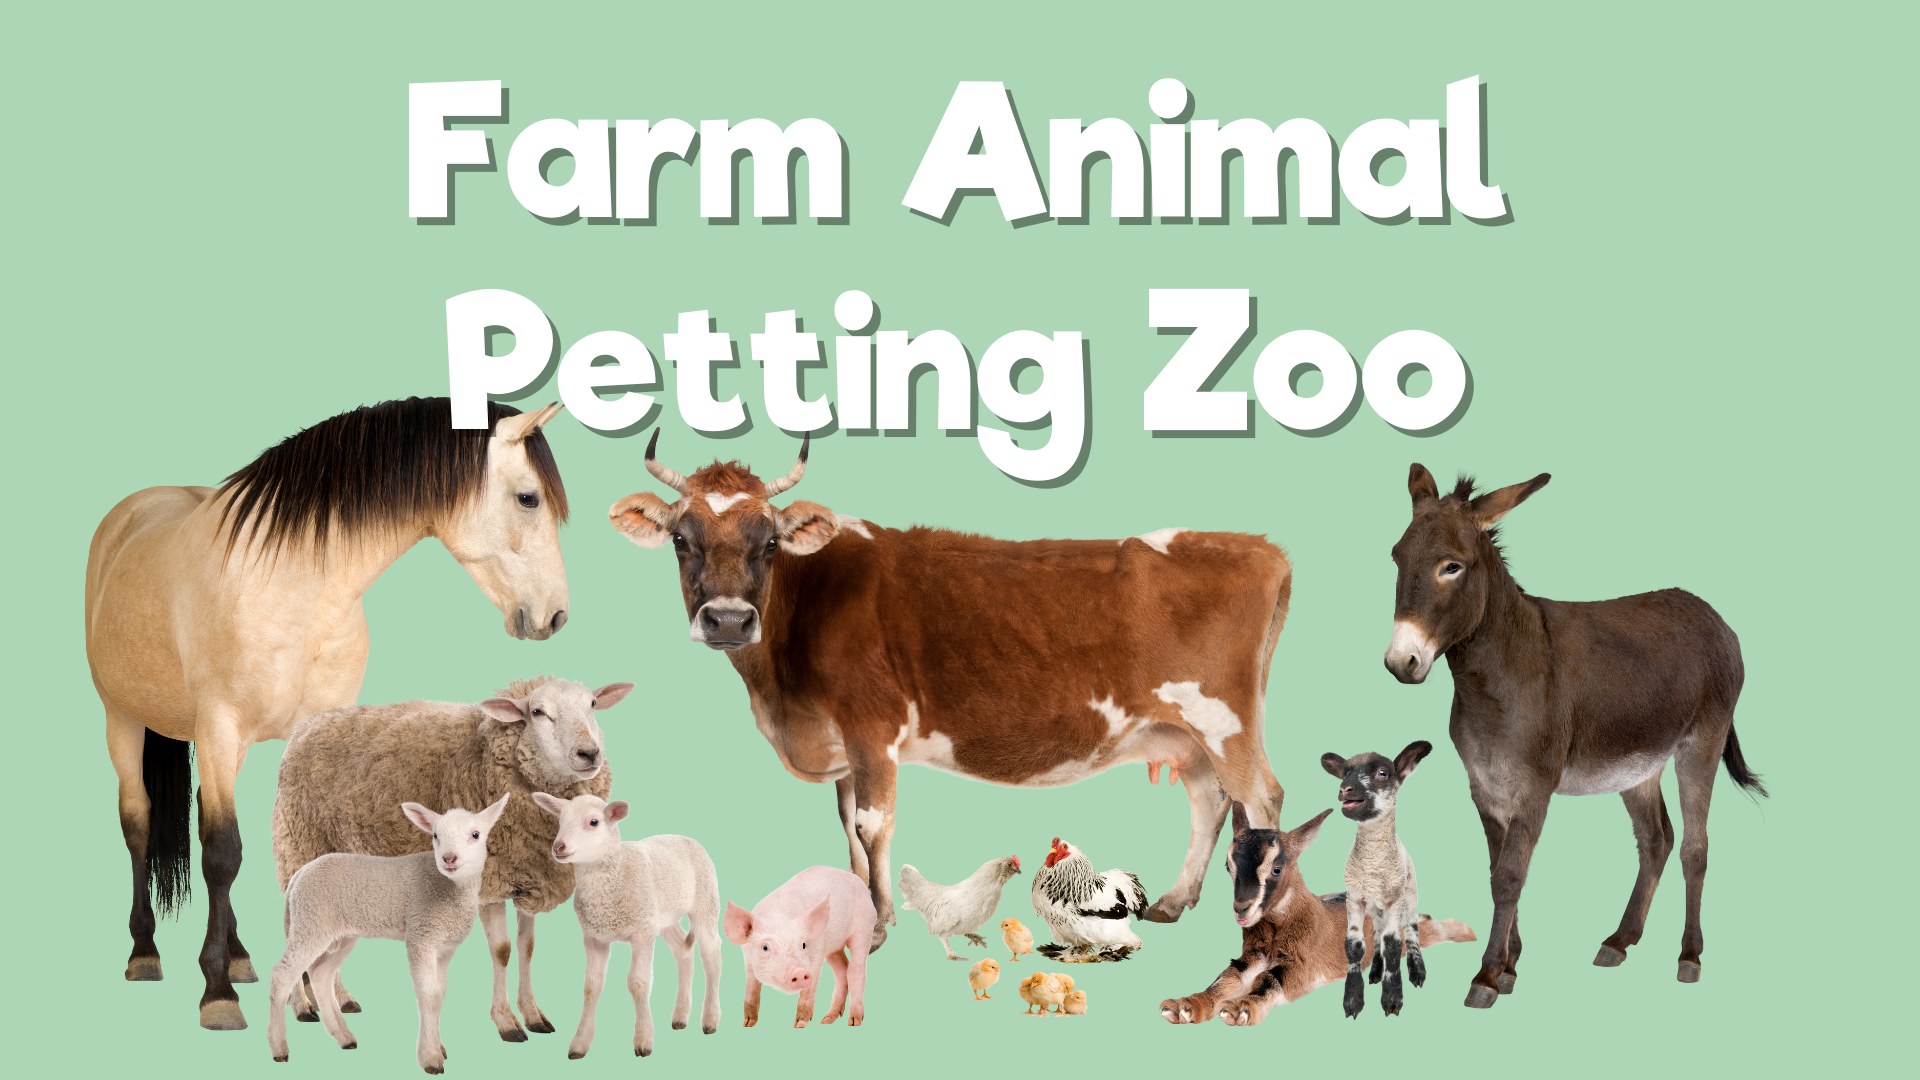 Farm Animal Petting Zoo - Delaware County CVB